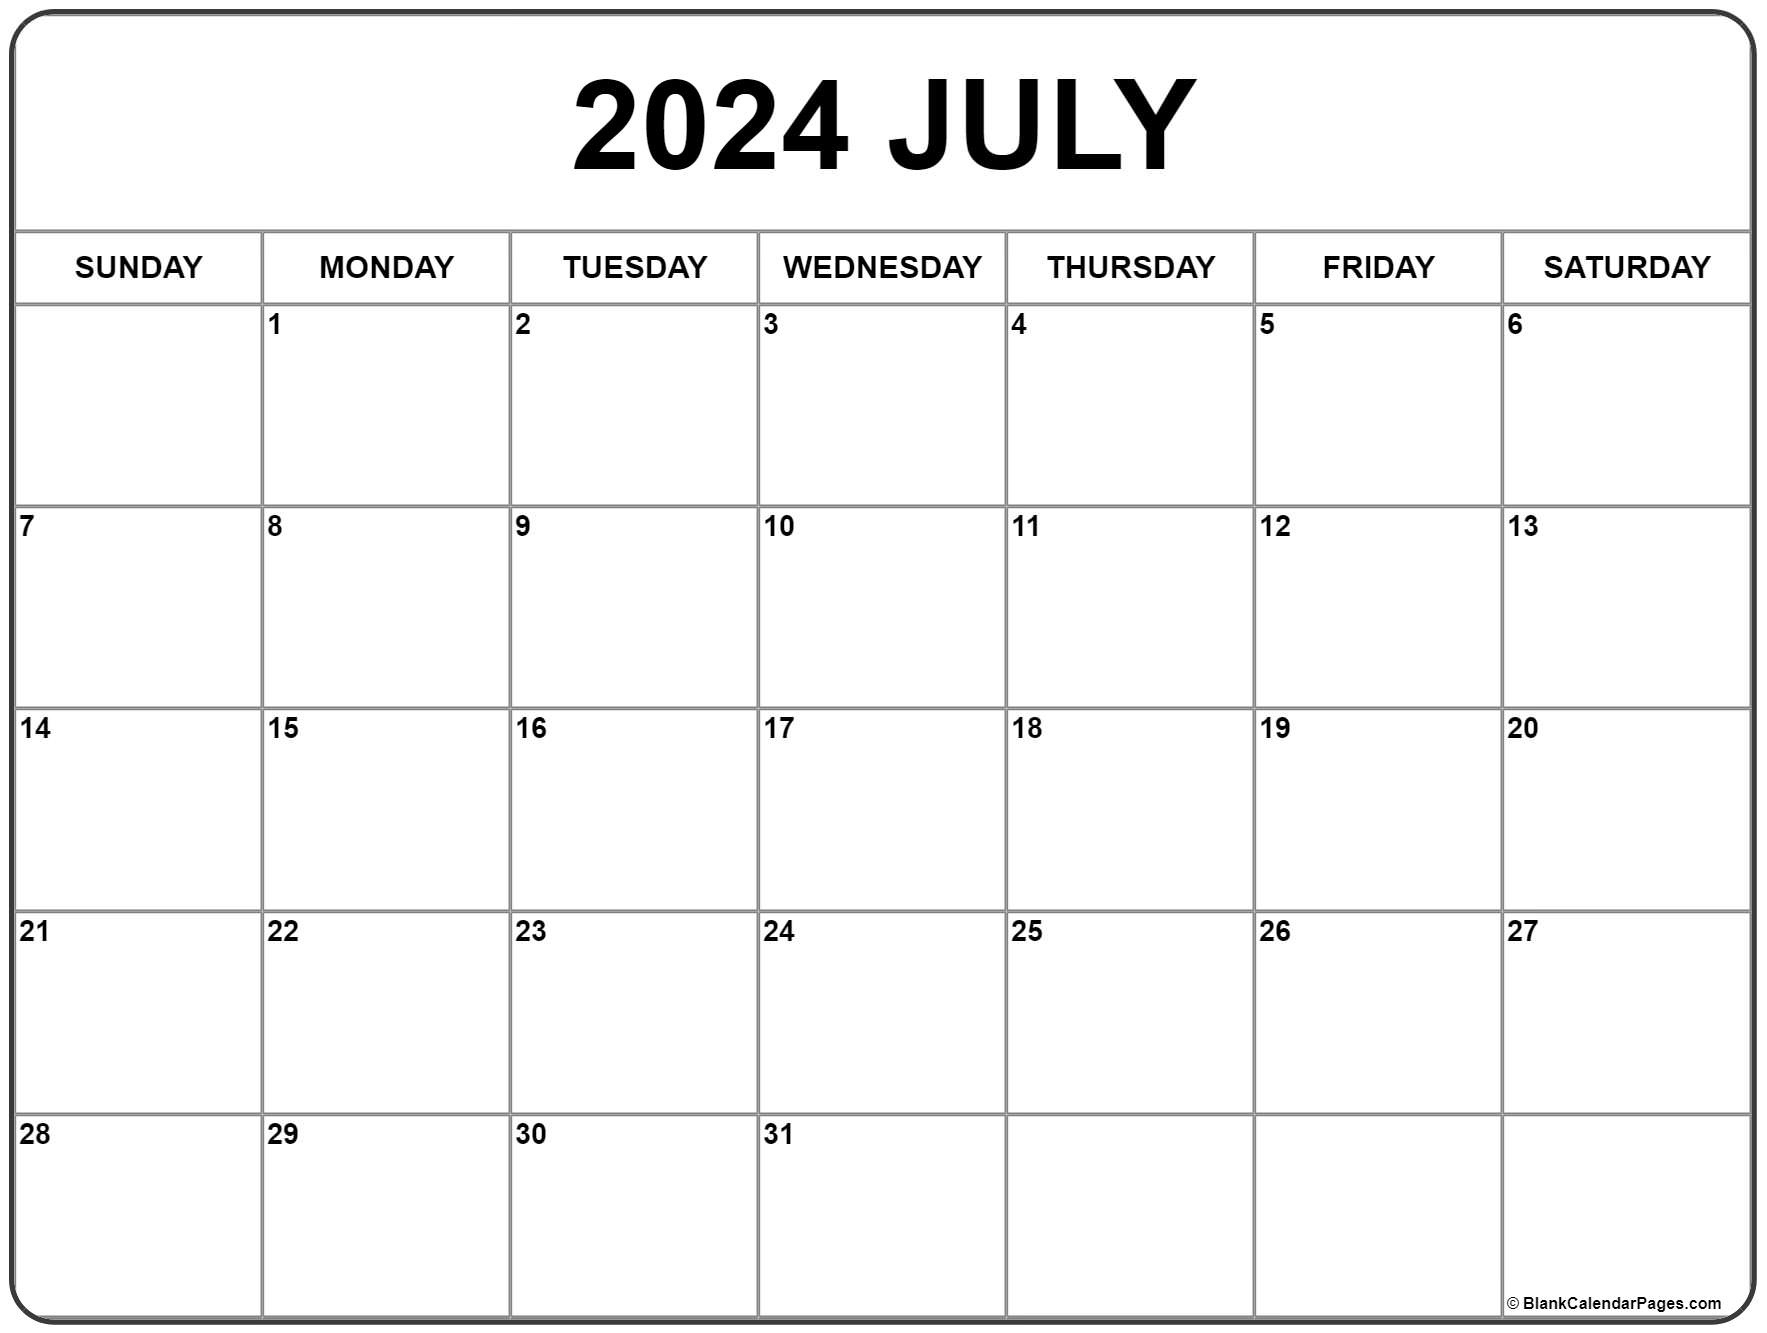 July 2024 Calendar | Free Printable Calendar within Free Calendar Template July 2024